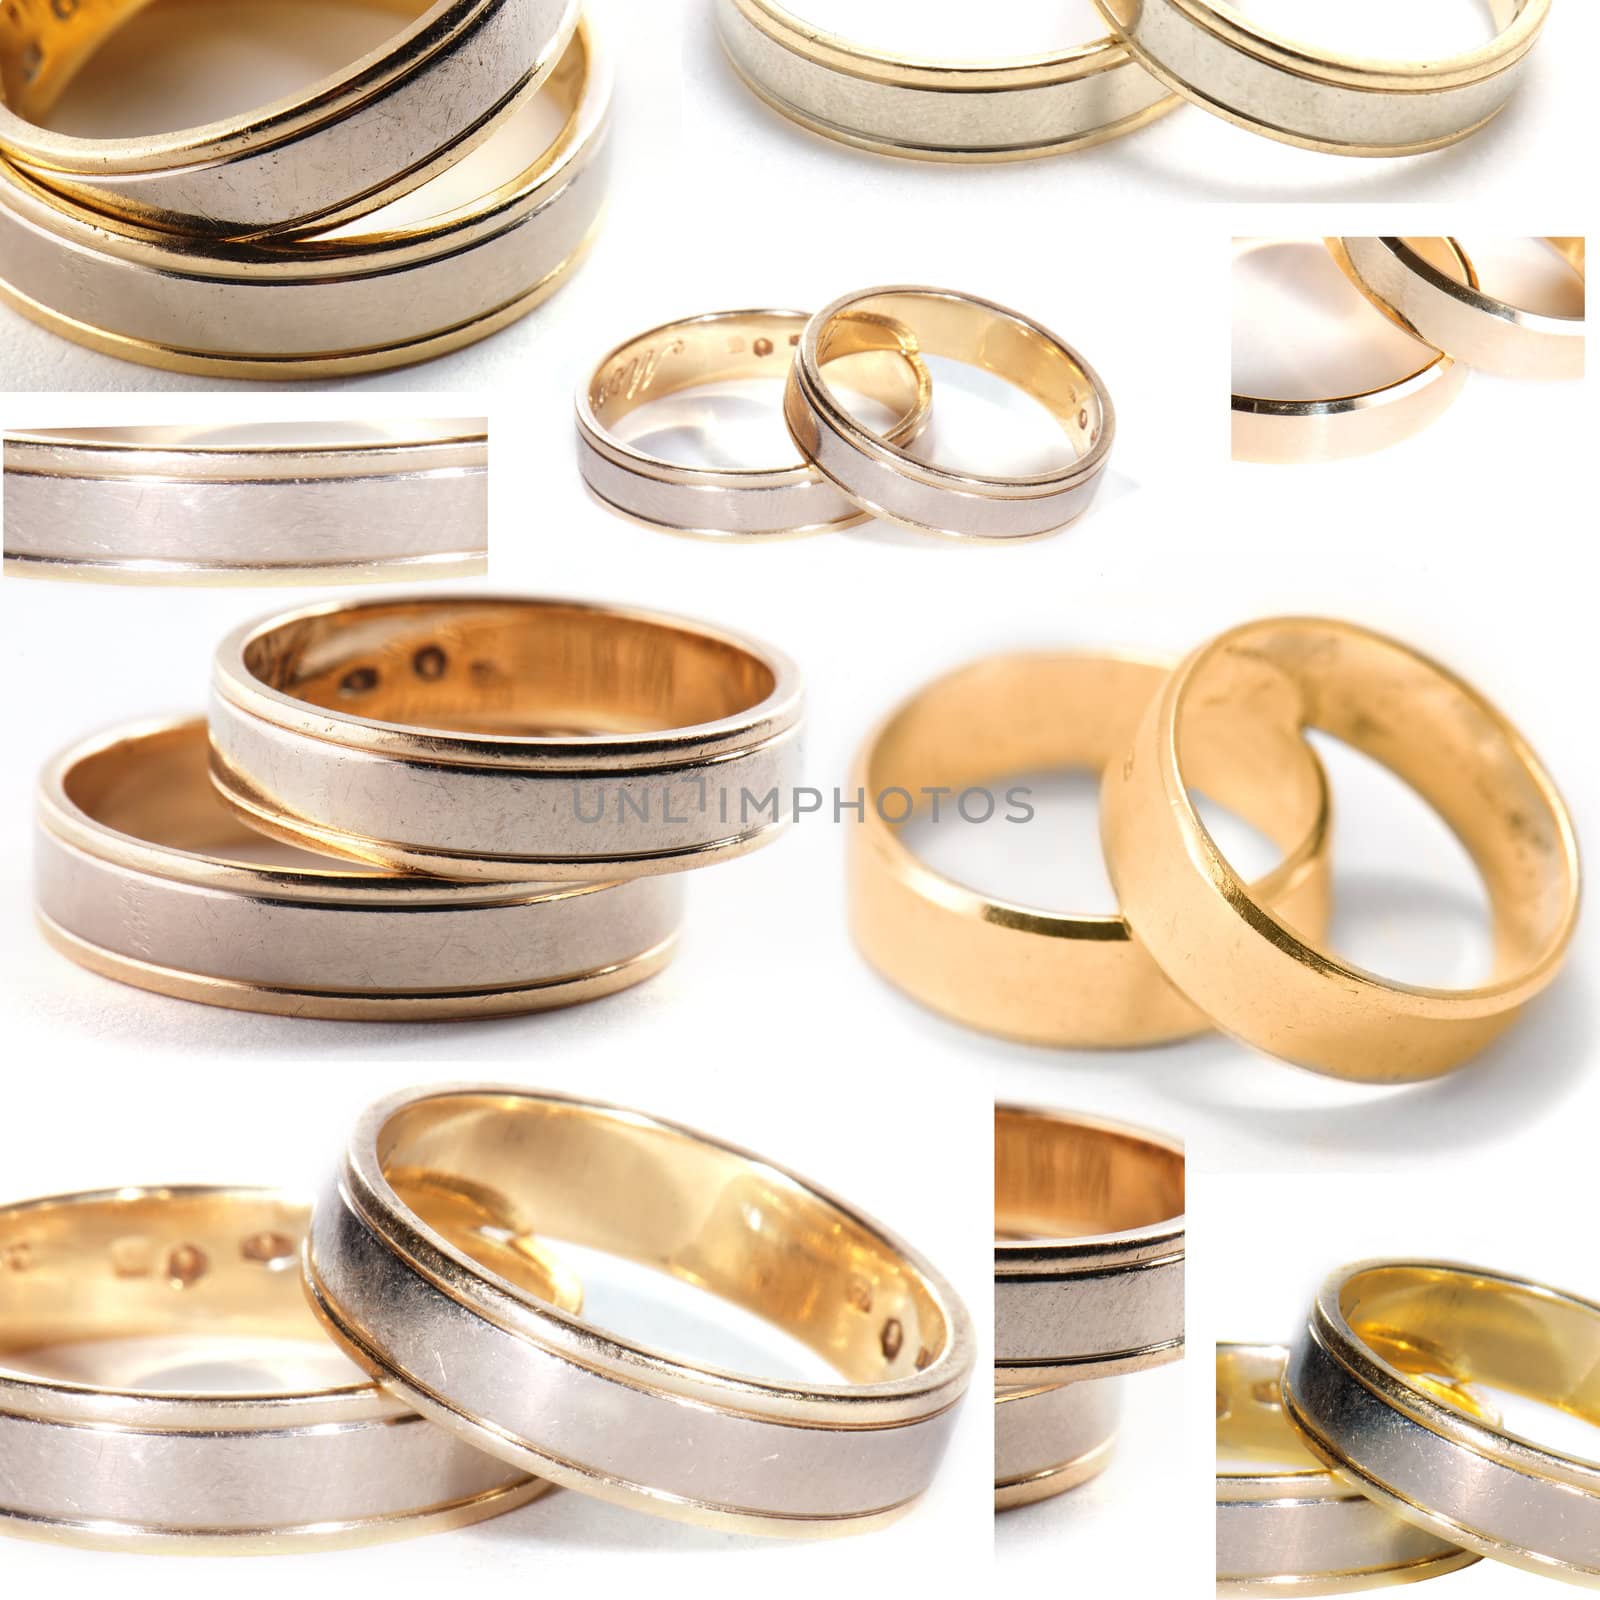 Assembling of wedding rings